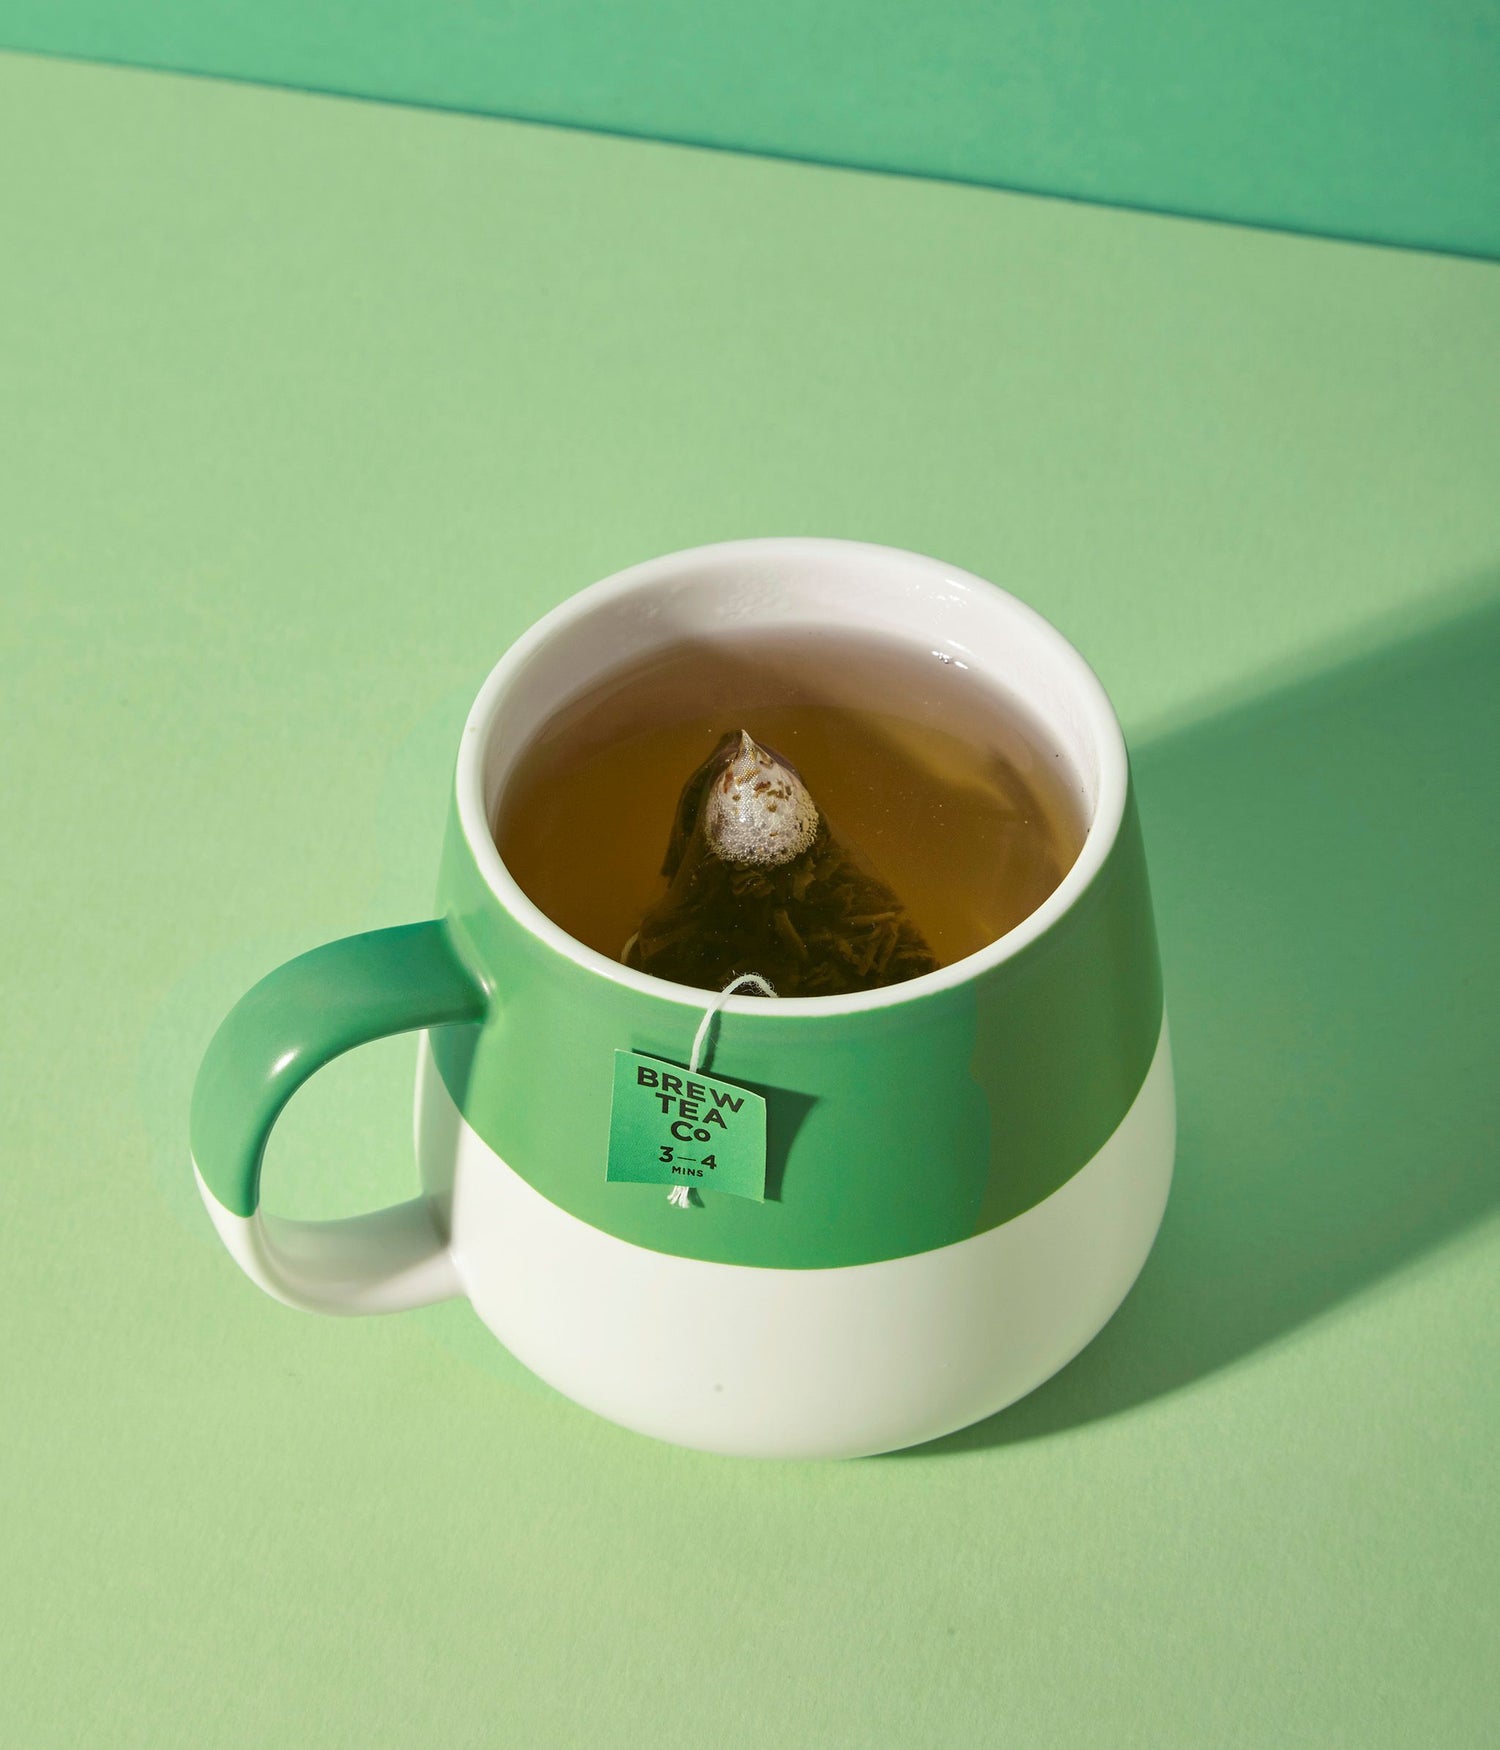 Brew Tea Co - Green Tea, 100 Tea Bags